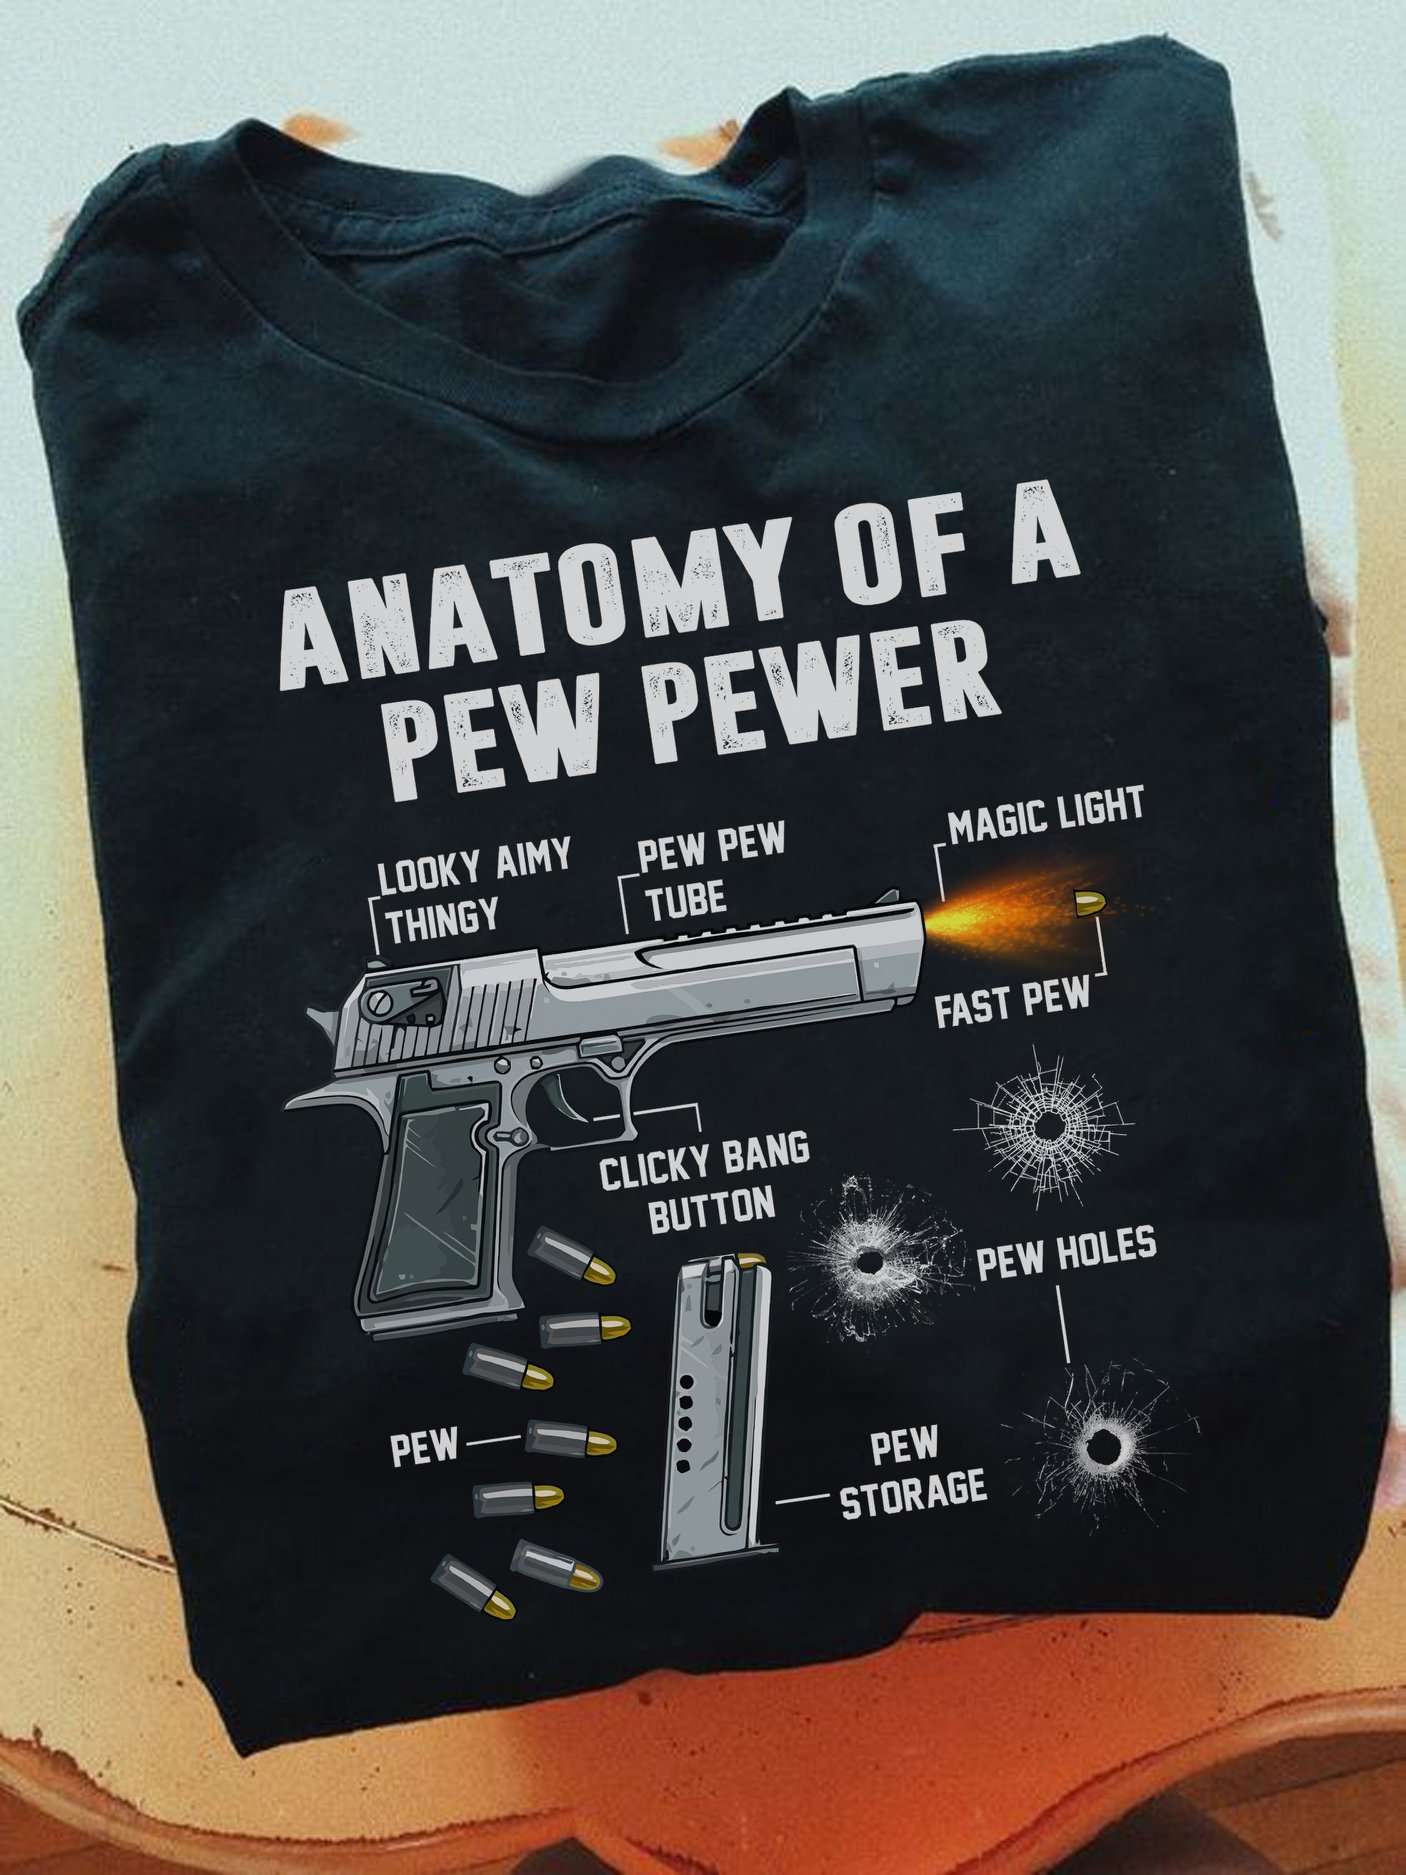 Anatomy of a pew pewer – Pistol – Pew pew tube